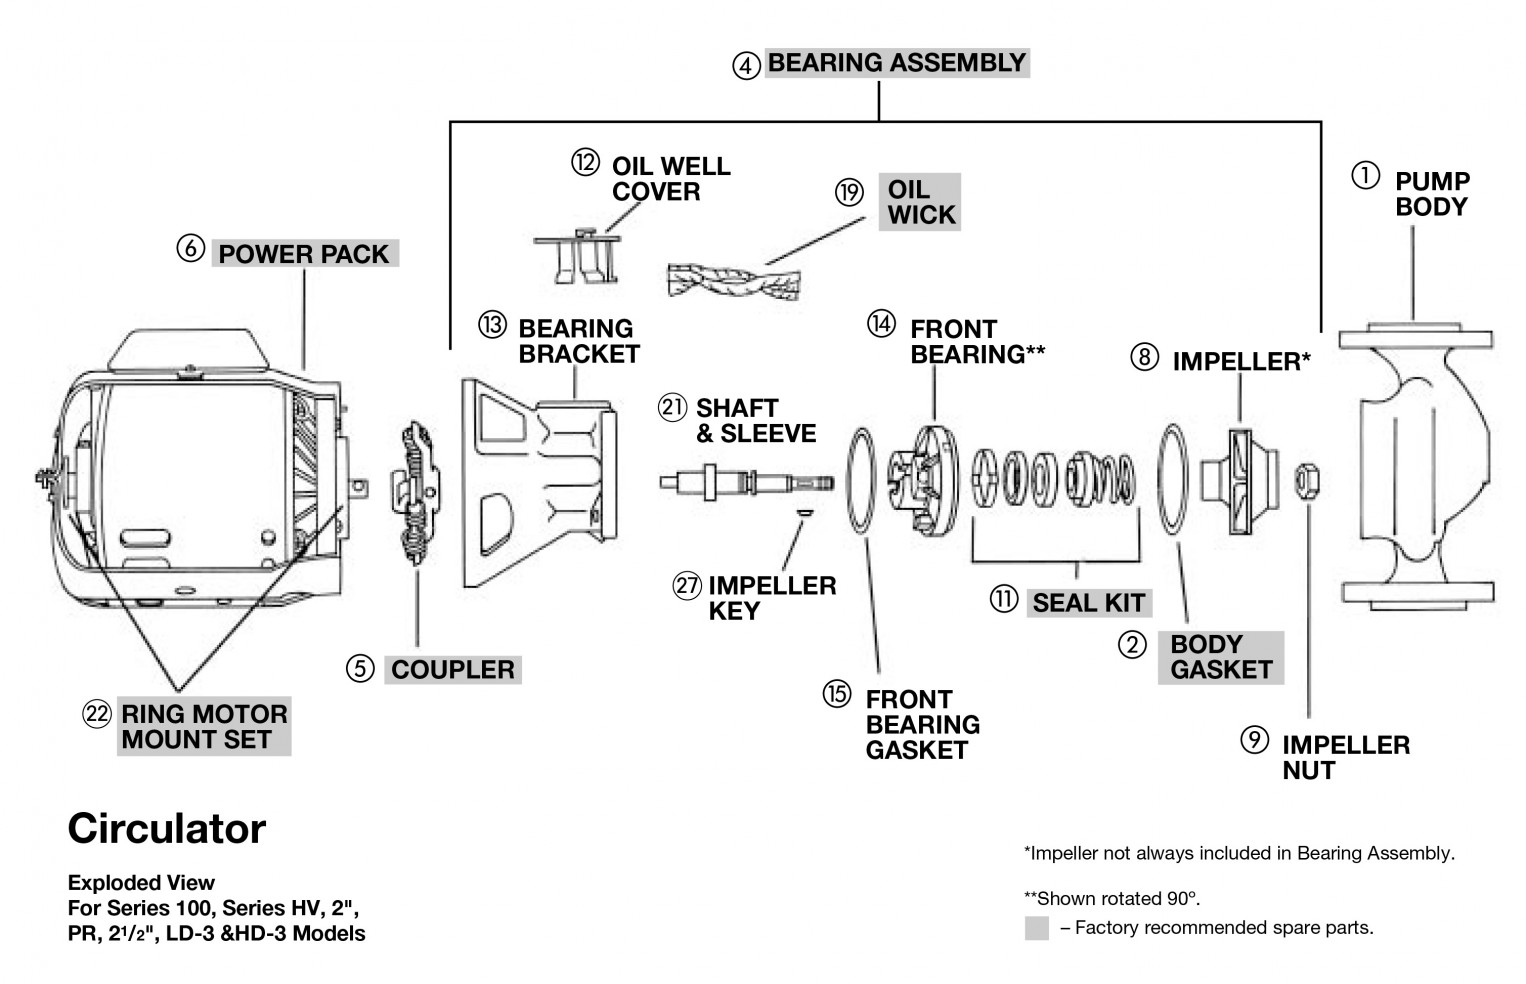 Bell gossett manuals and parts